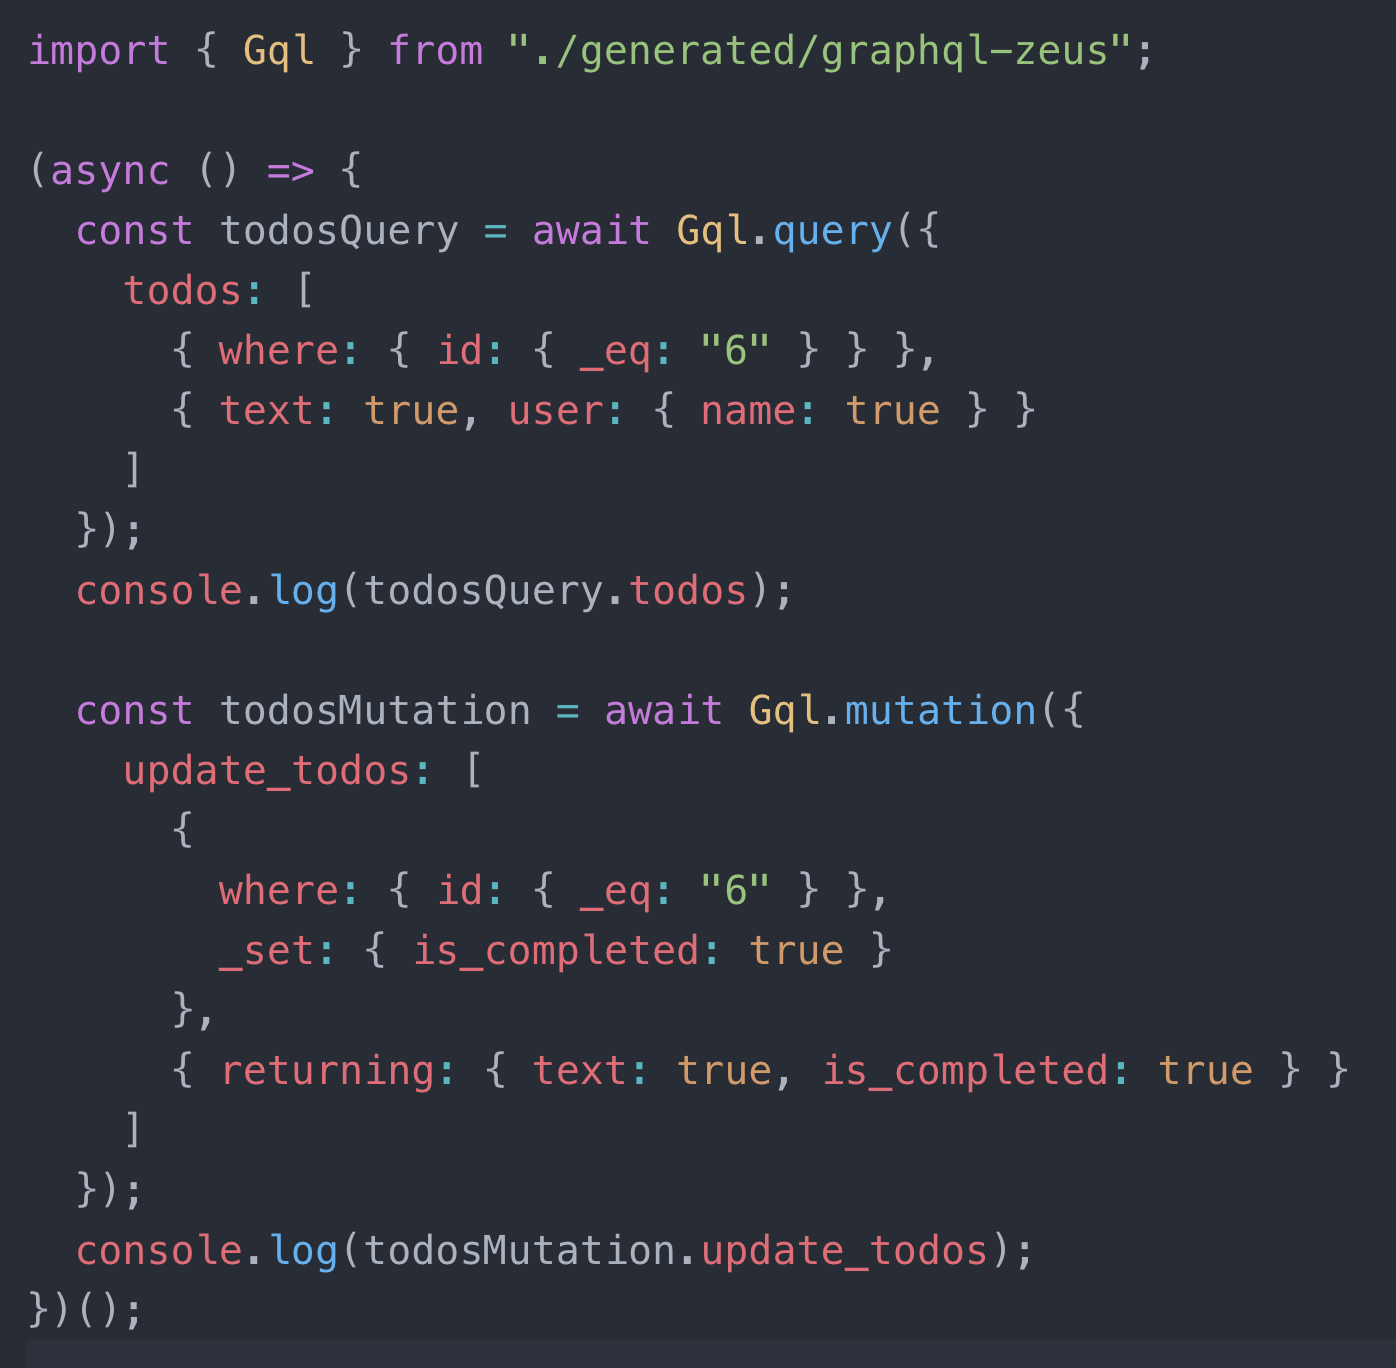 graphql-zeus creates an autocomplete client library for JavaScript or TypeScript